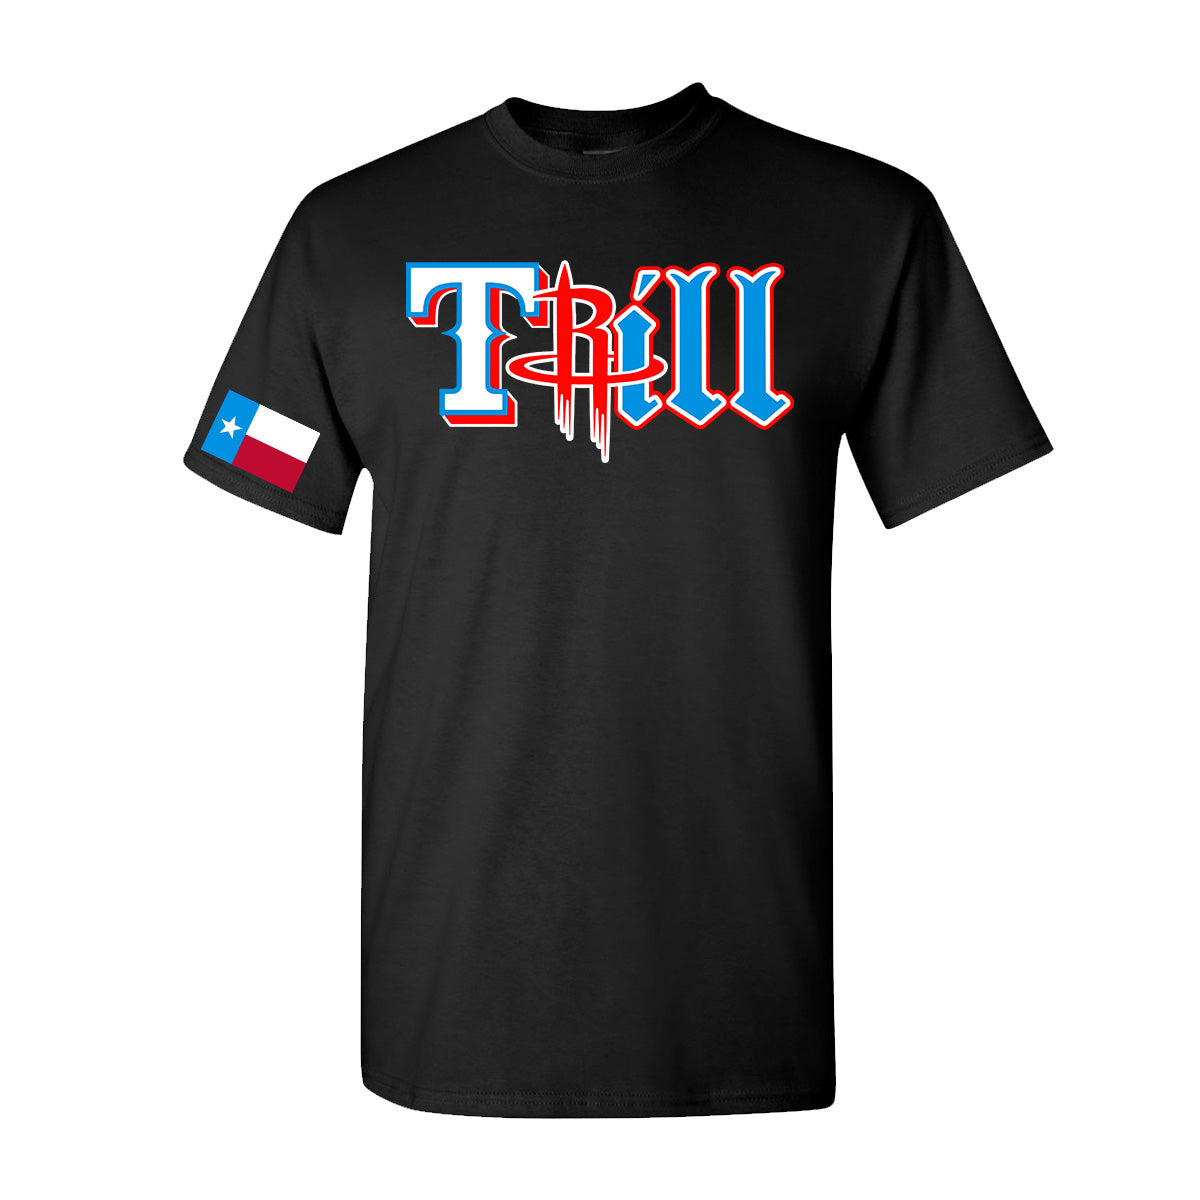 "TRILL" H-Town Tribute Unisex T-shirt (Black) by illpaso x Team Dirty